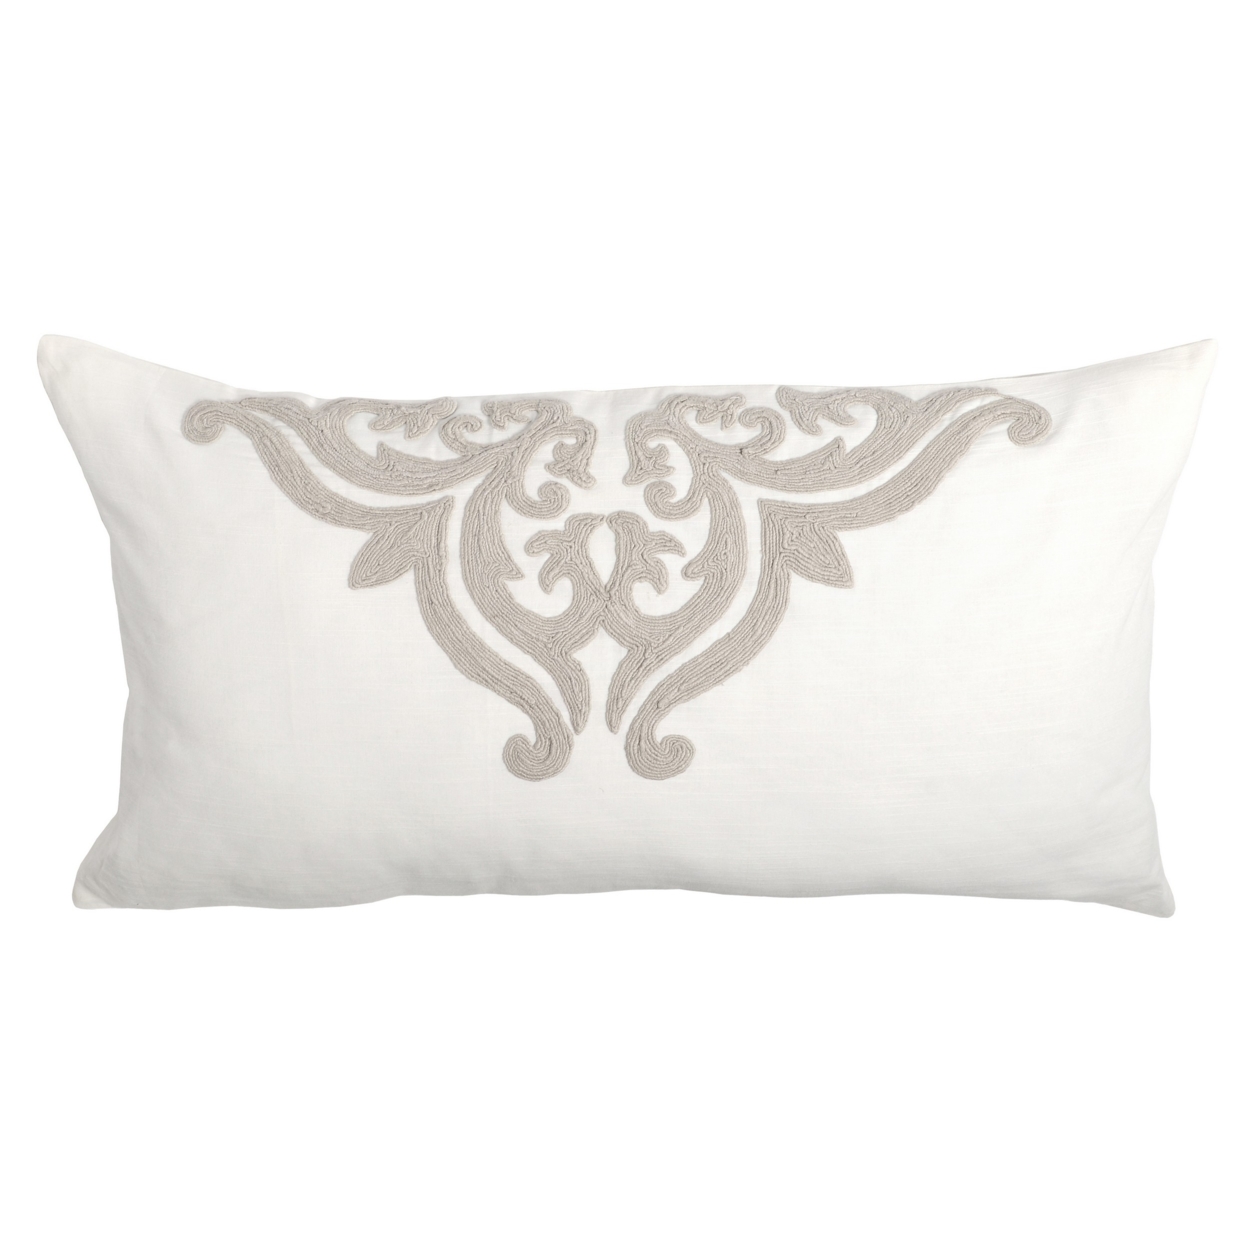 Lenz 20 X 36 Lumbar King Pillow Sham, Hand Stitched Ivory Damask Embroidery- Saltoro Sherpi